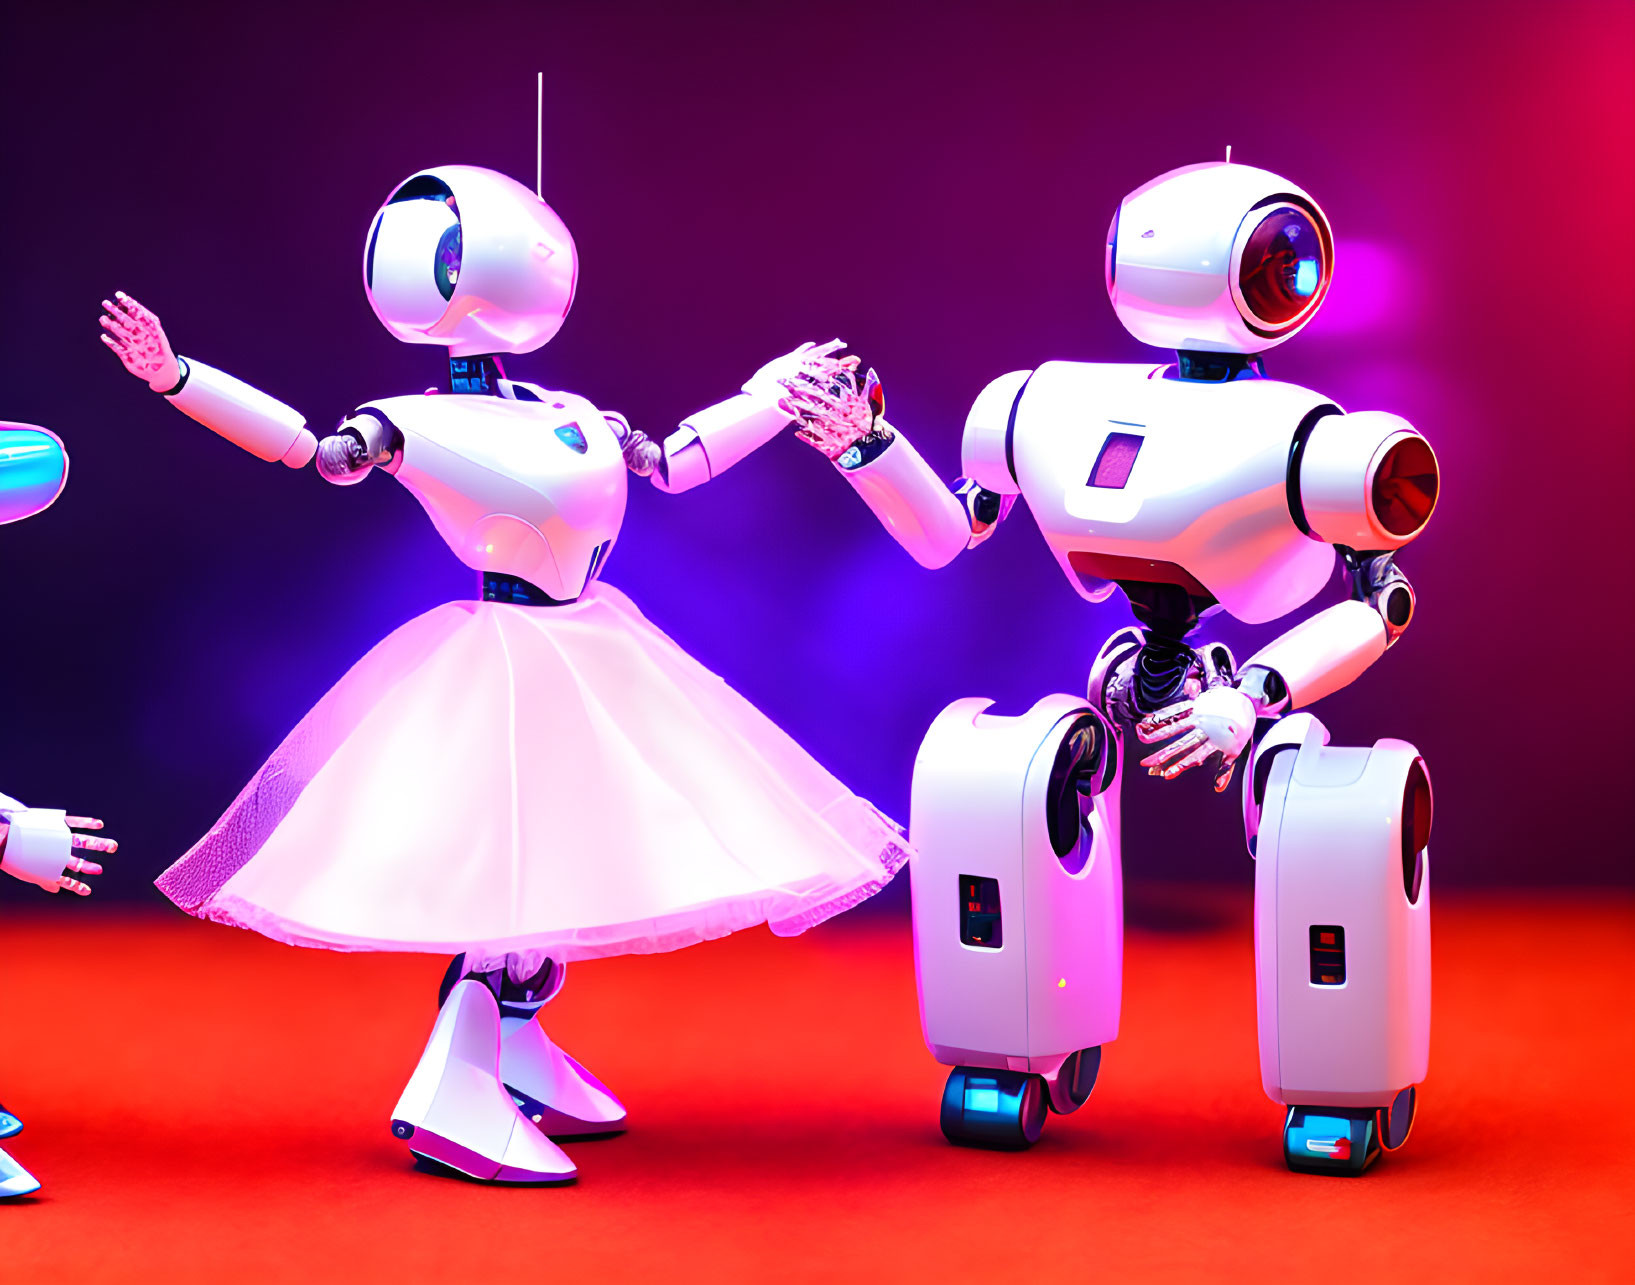 Robots love to dance